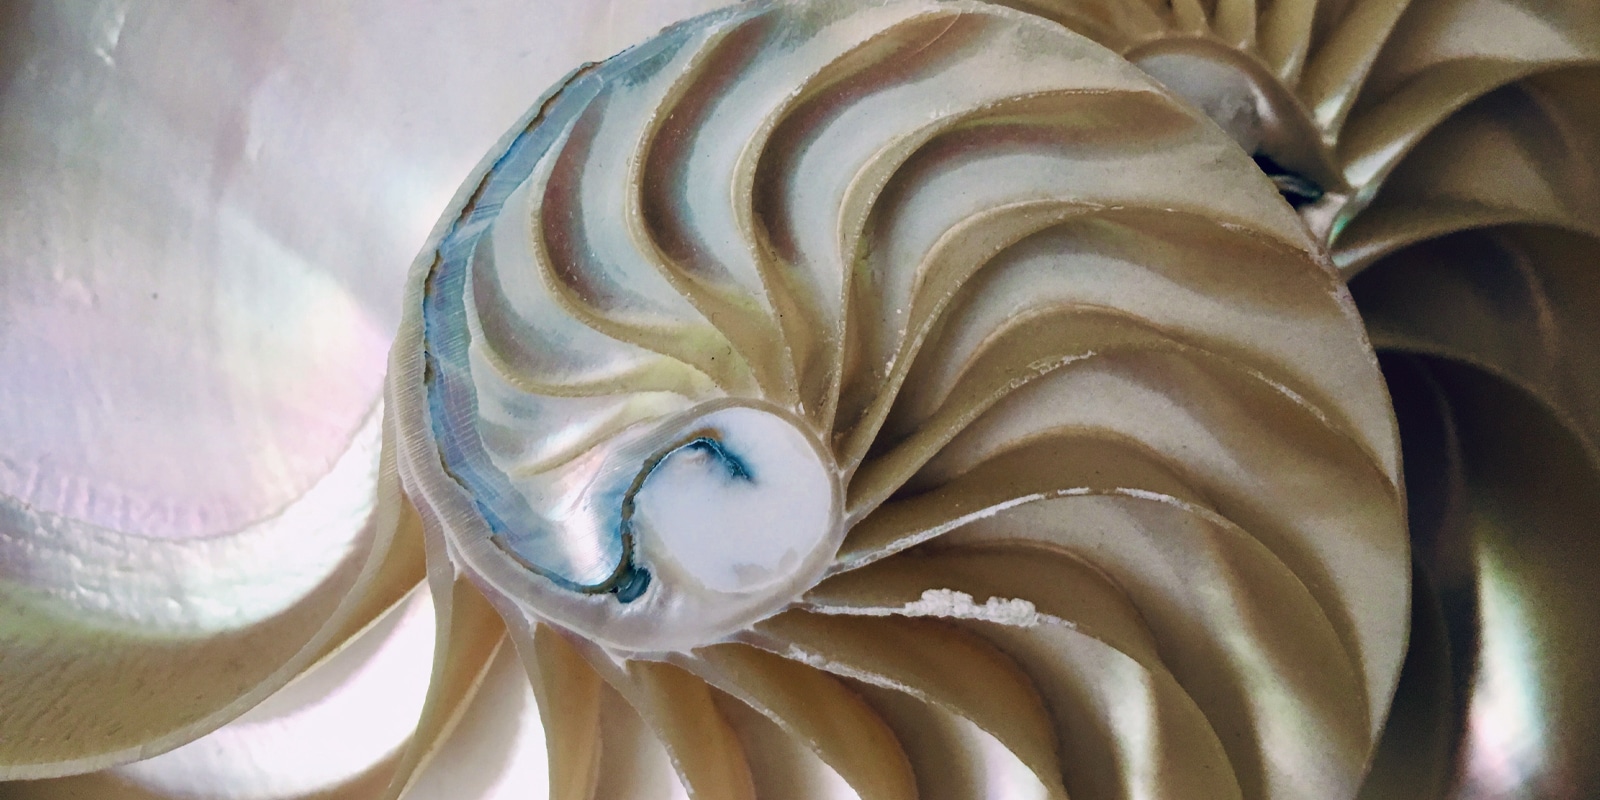 Edexcel Further Maths A-Level -An image of sea shells